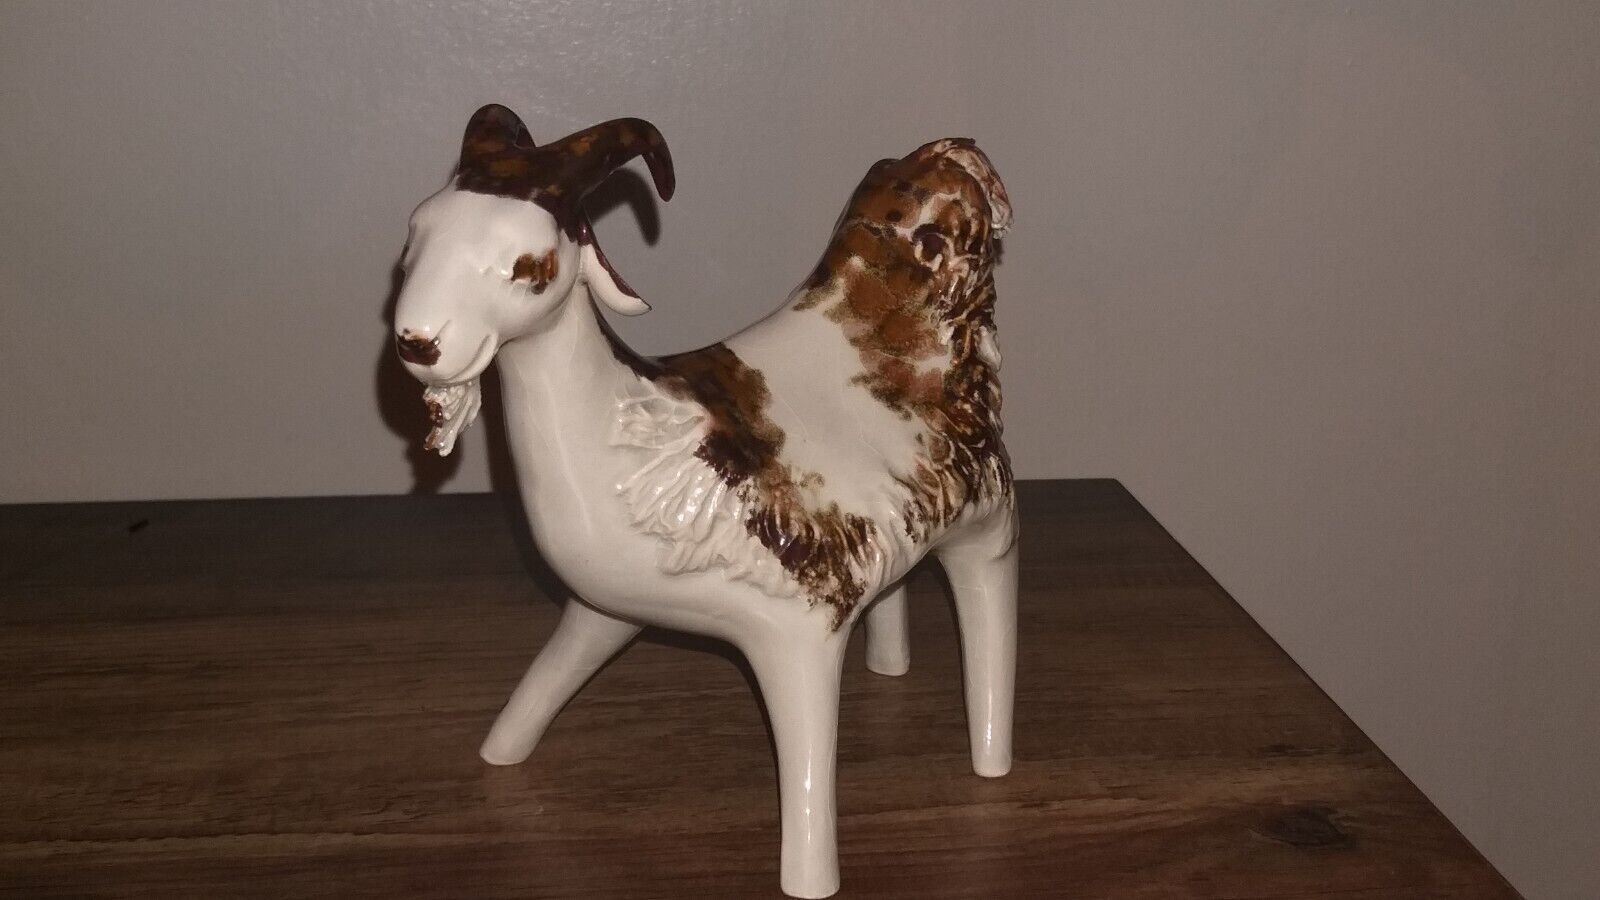 The perfect gift - a rare ceramic goat figurine